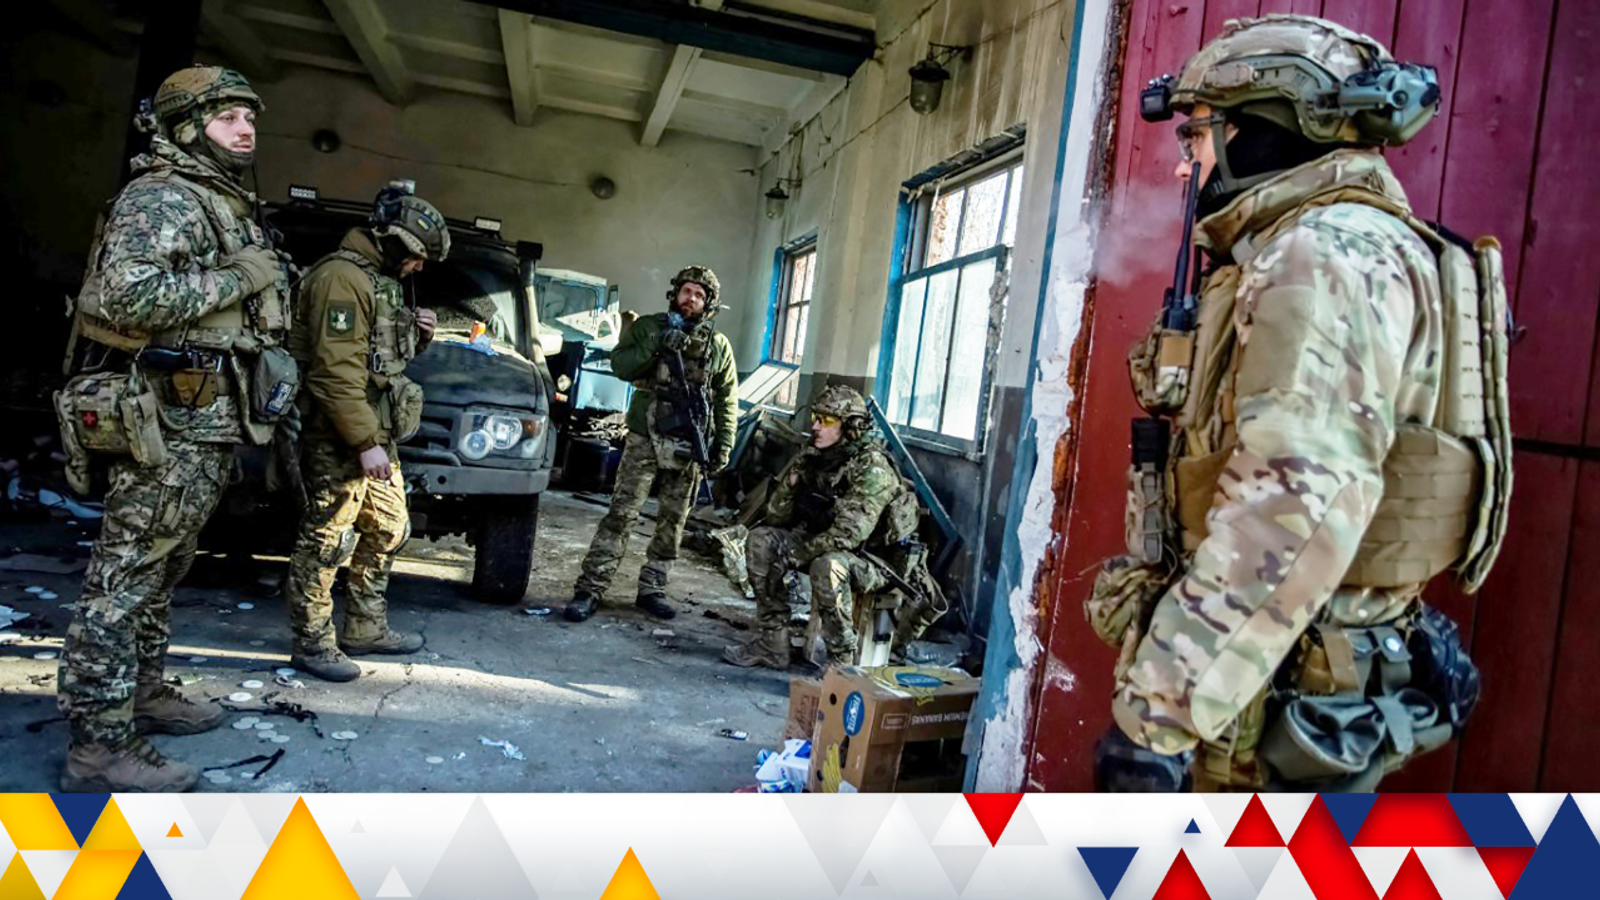 Ukraine preparing for major escalation by Russia, top Ukrainian security official tells Sky News